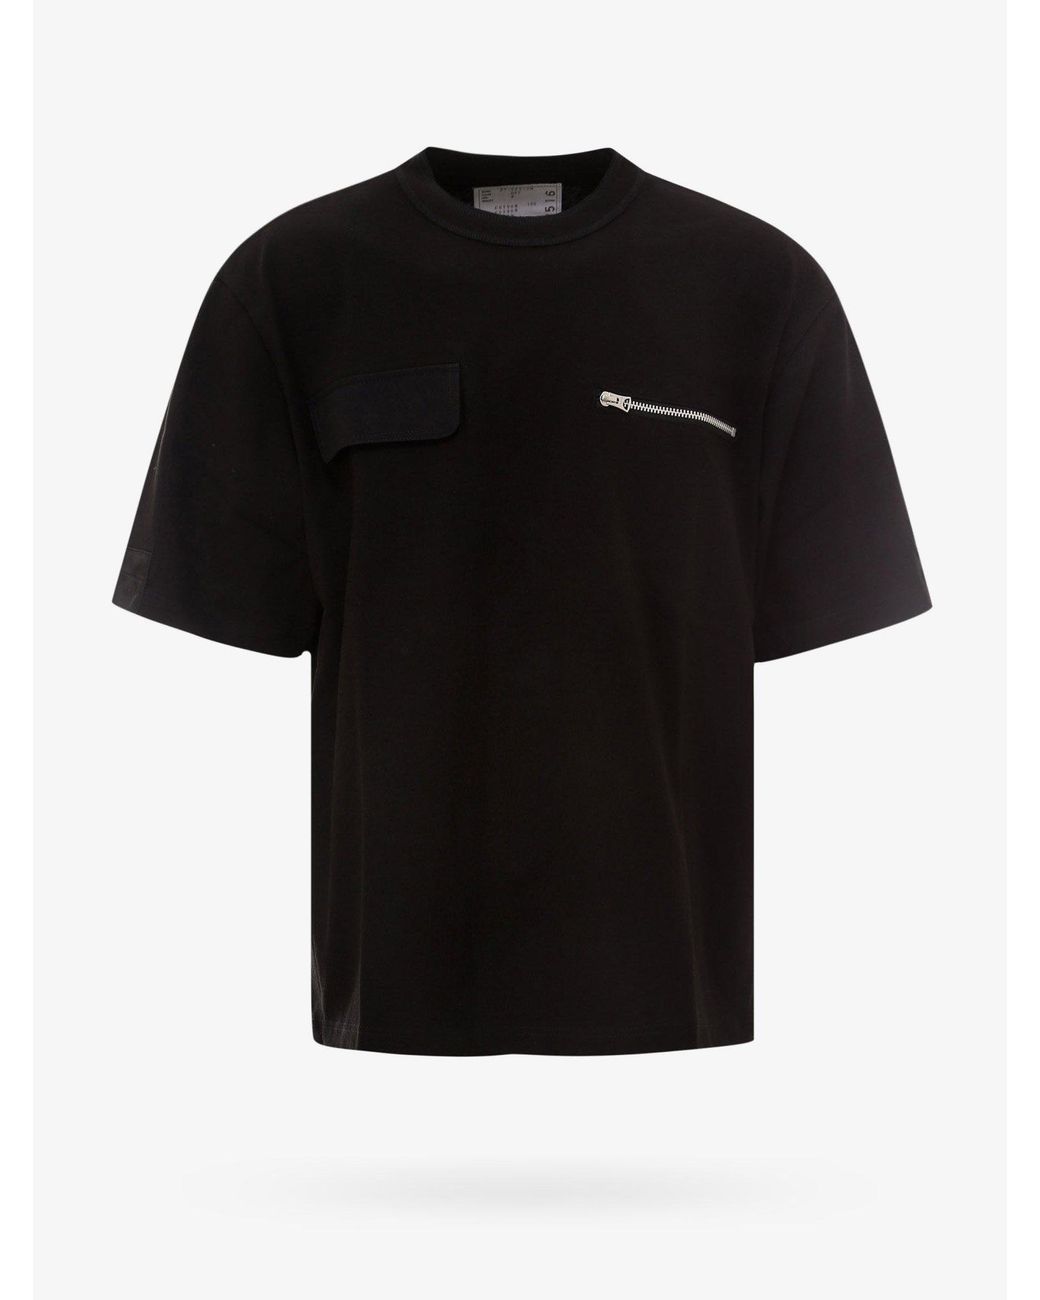 Sacai Cotton T-shirt in Black for Men - Lyst